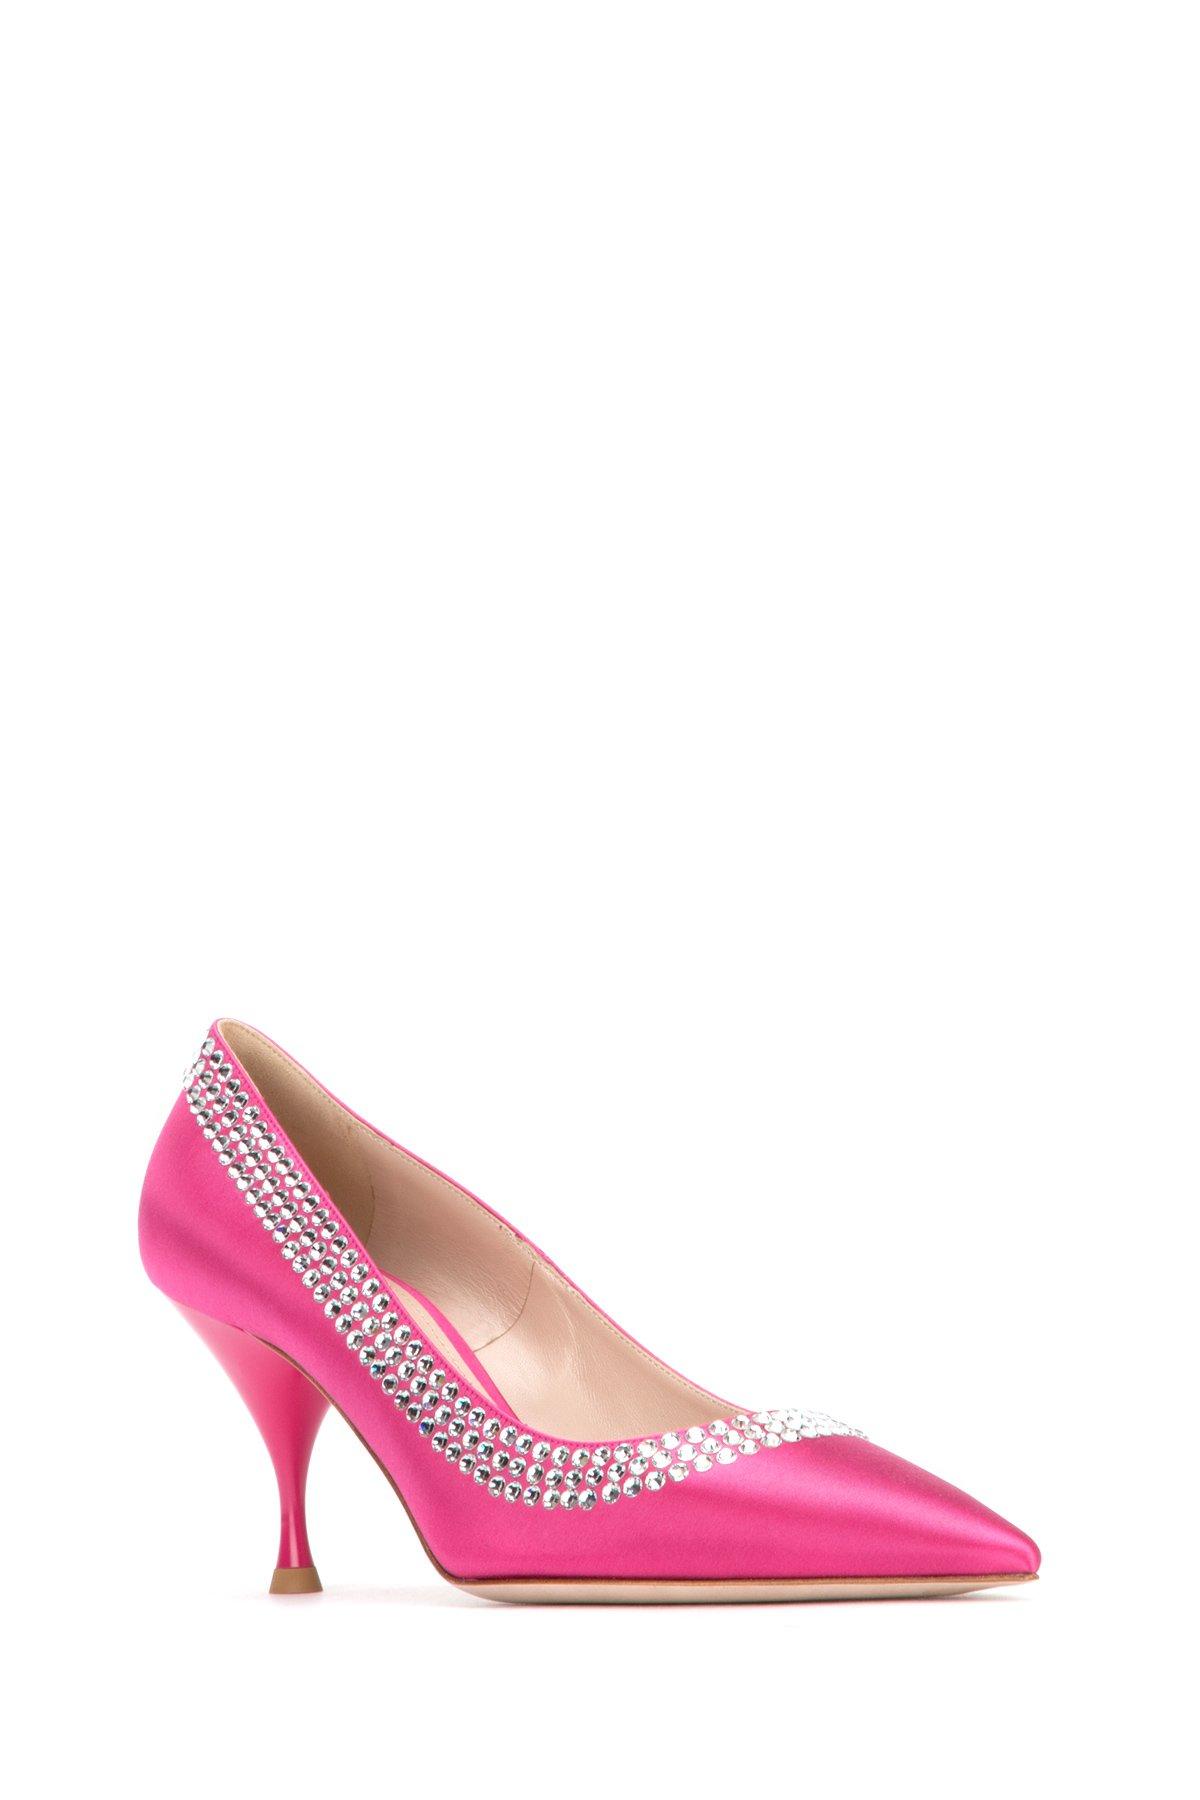 Miu Miu Satin Embellished Heeled Pumps in Pink - Save 52% - Lyst